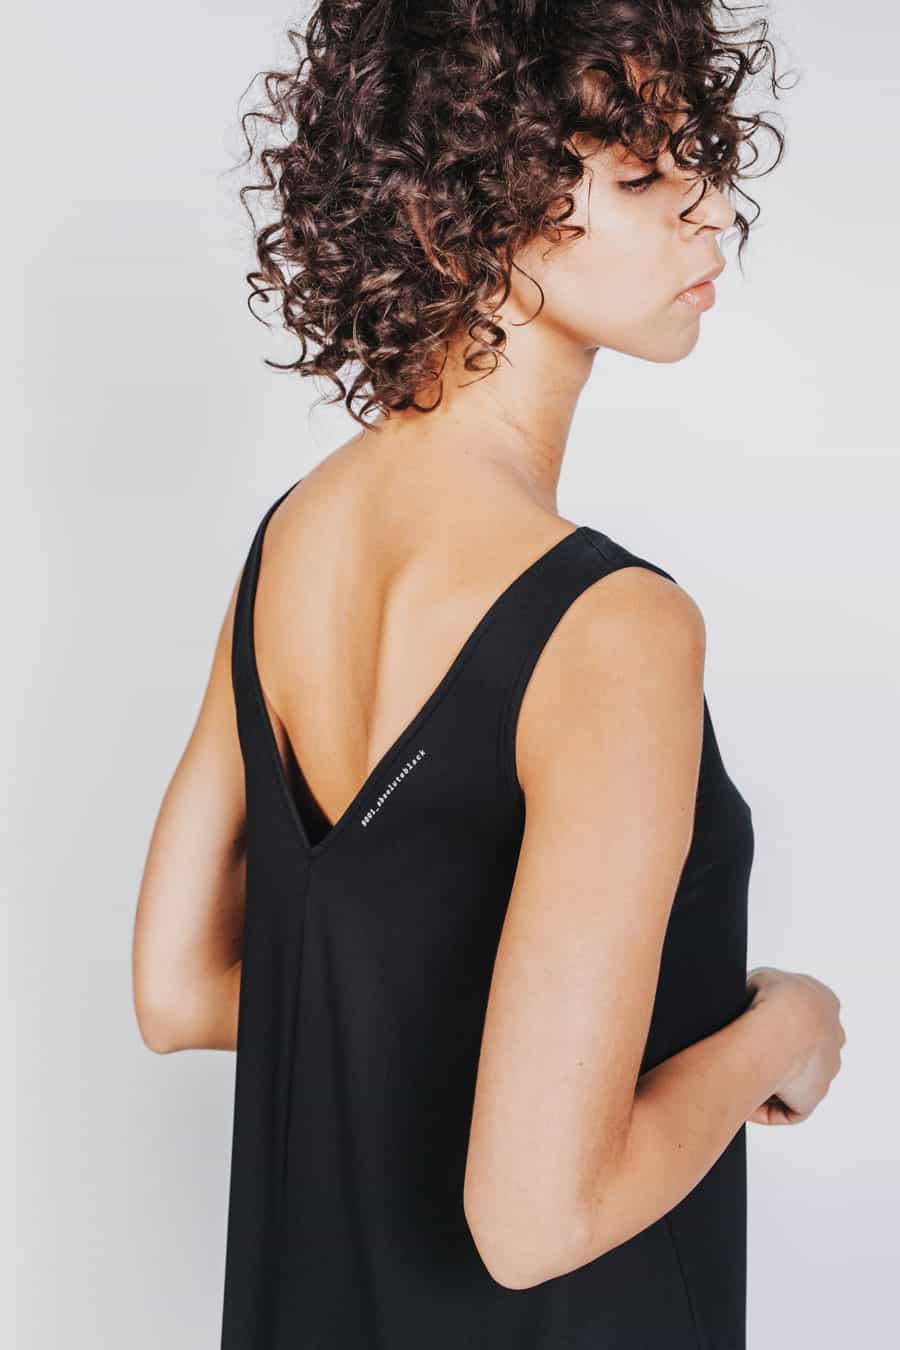 Deep White Black Modell SASHA langes Kleid schwarz, ärmelloses Sommerkleid mit V-Ausschnitt, Schriftzug 9001 Absolute Black, Ansicht Detail Ausschnitt hinten